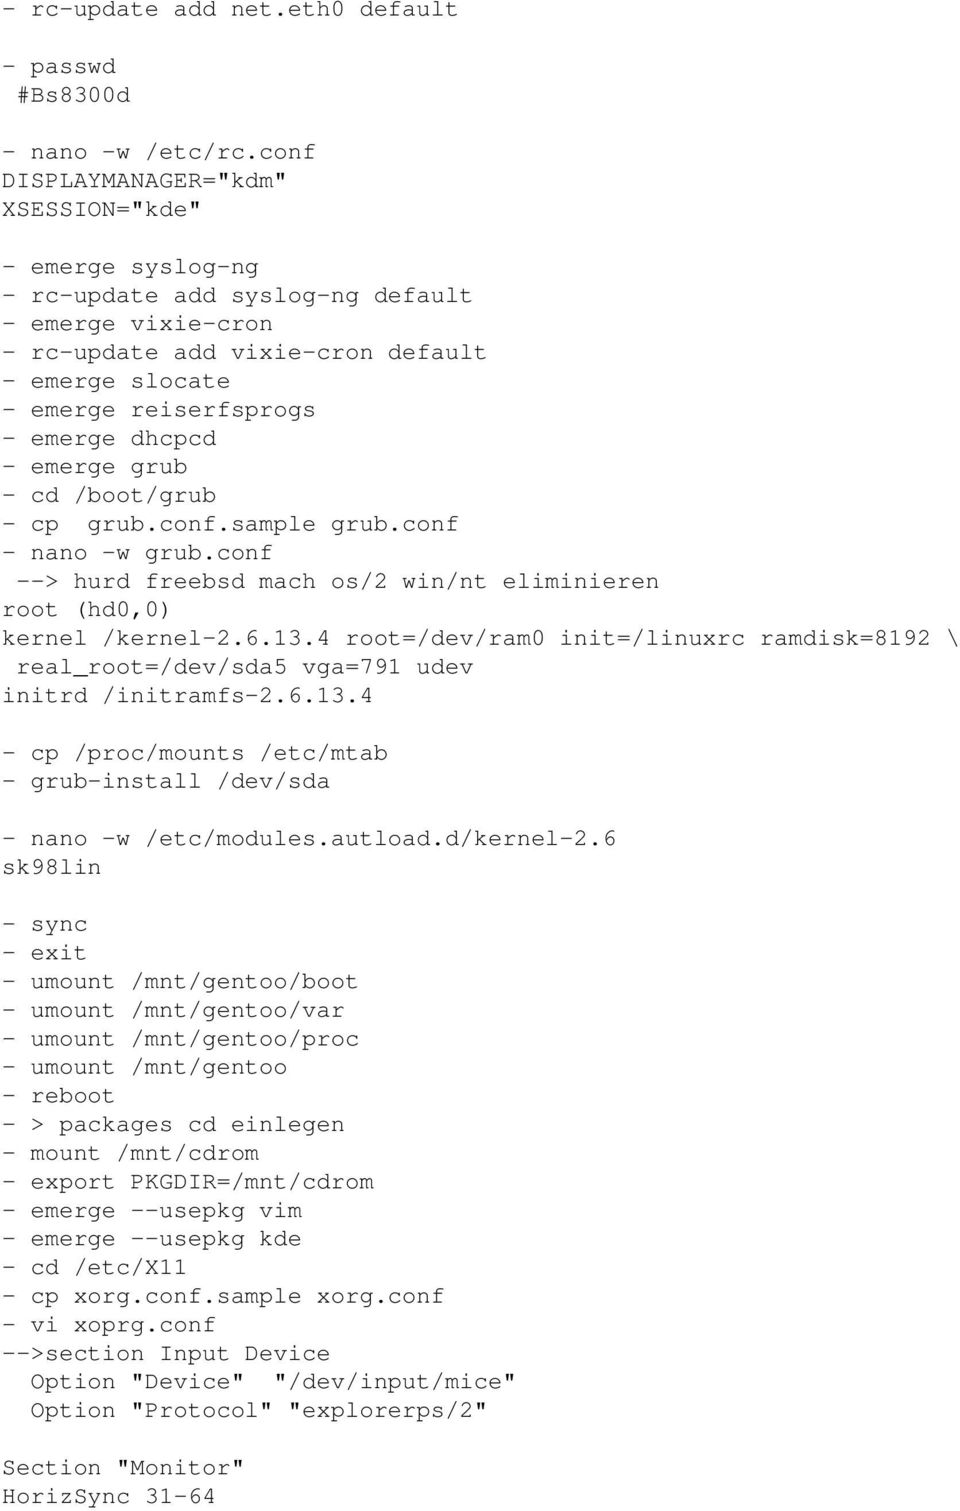 dhcpcd - emerge grub - cd /boot/grub - cp grub.conf.sample grub.conf - nano -w grub.conf --> hurd freebsd mach os/2 win/nt eliminieren root (hd0,0) kernel /kernel-2.6.13.